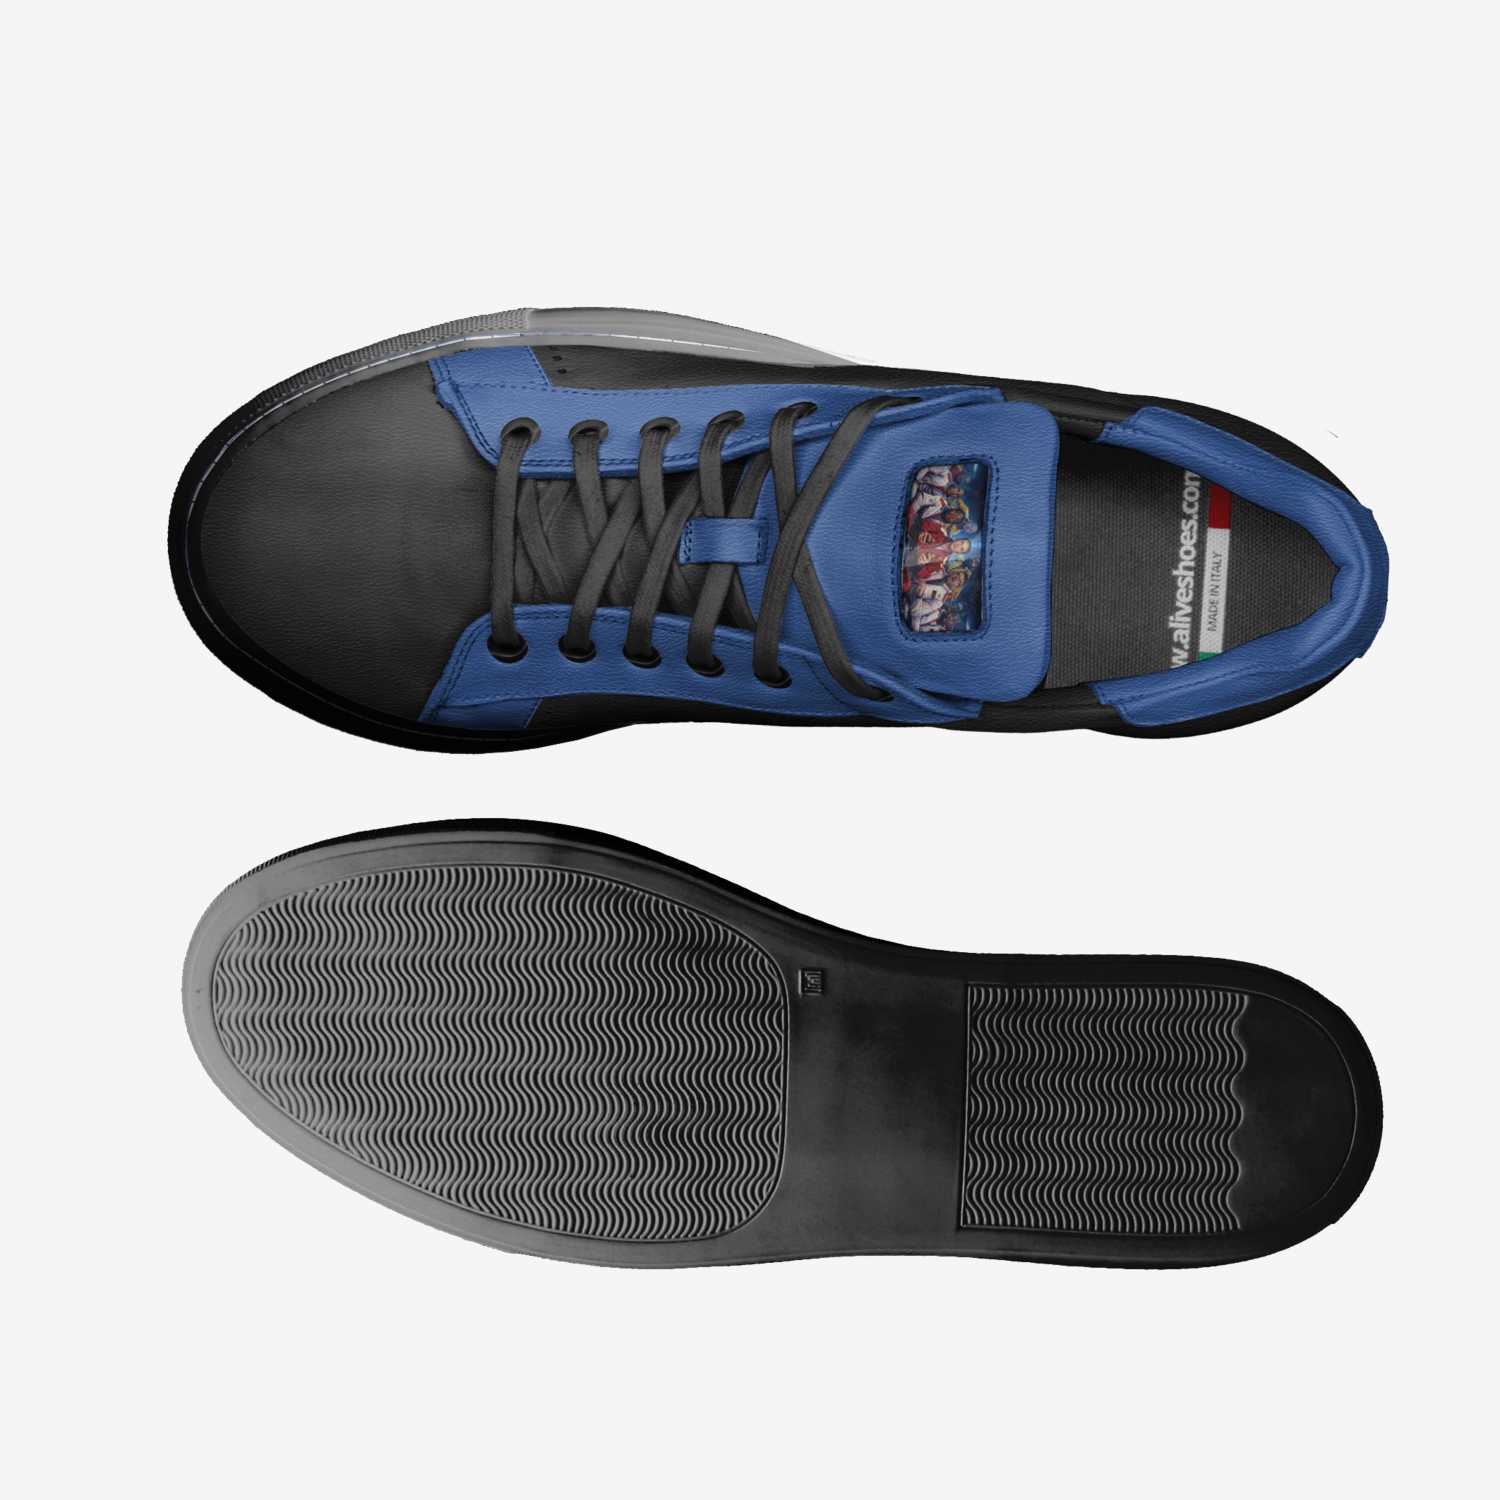 Logic's footware | A Custom Shoe concept by Jackson Roach